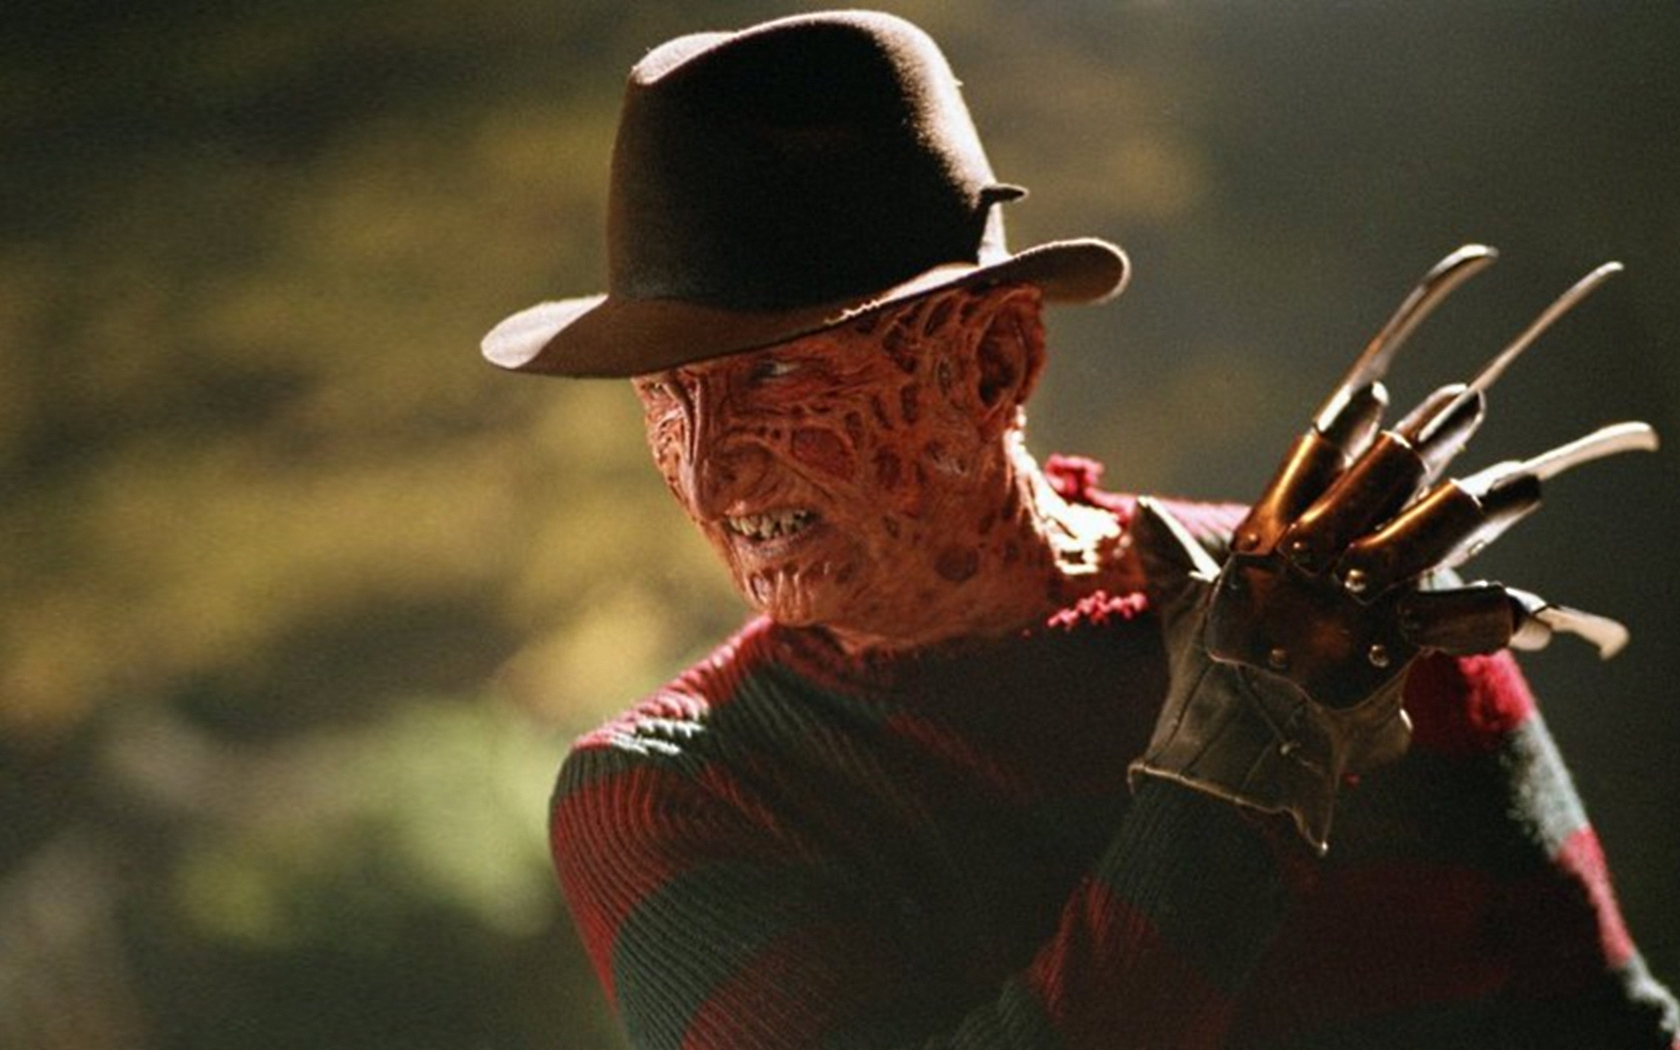 Freddy's Claws, Nightmare On Elm Street